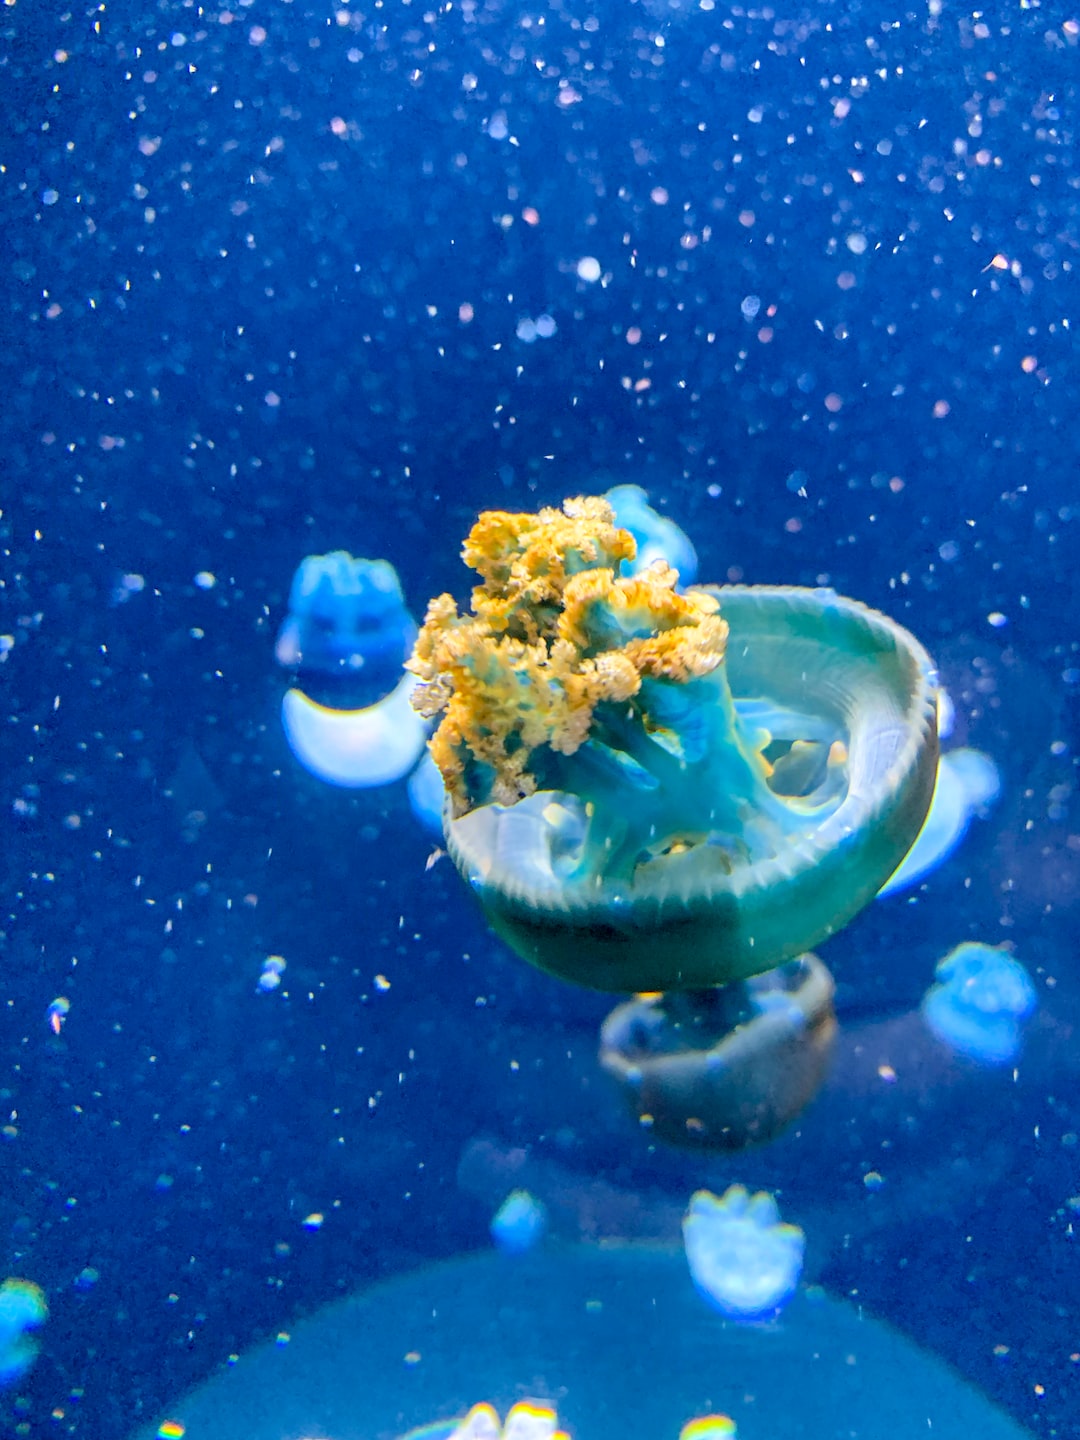 22 wichtige Fragen zu How Many Eggs Do Snails Lay In A Fish Tank?